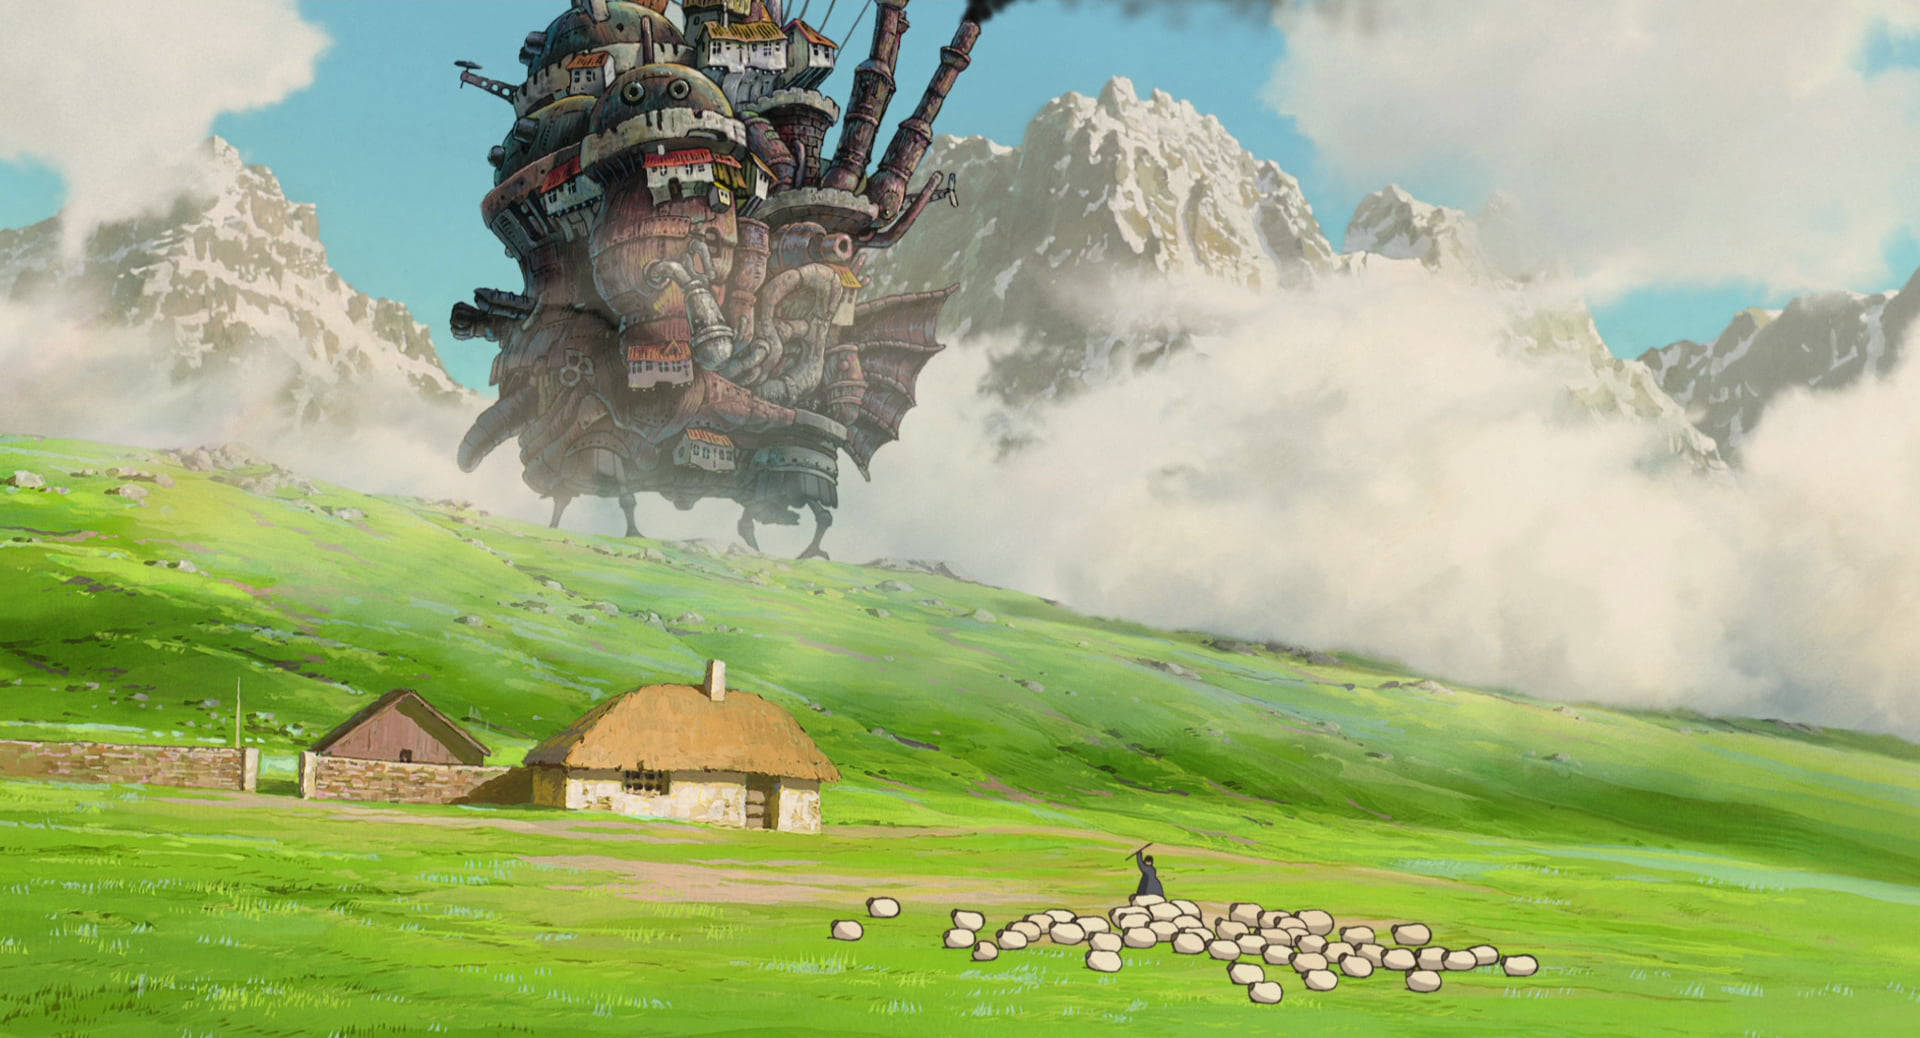 Studio Ghibli Scenery Of Sheep On Farm